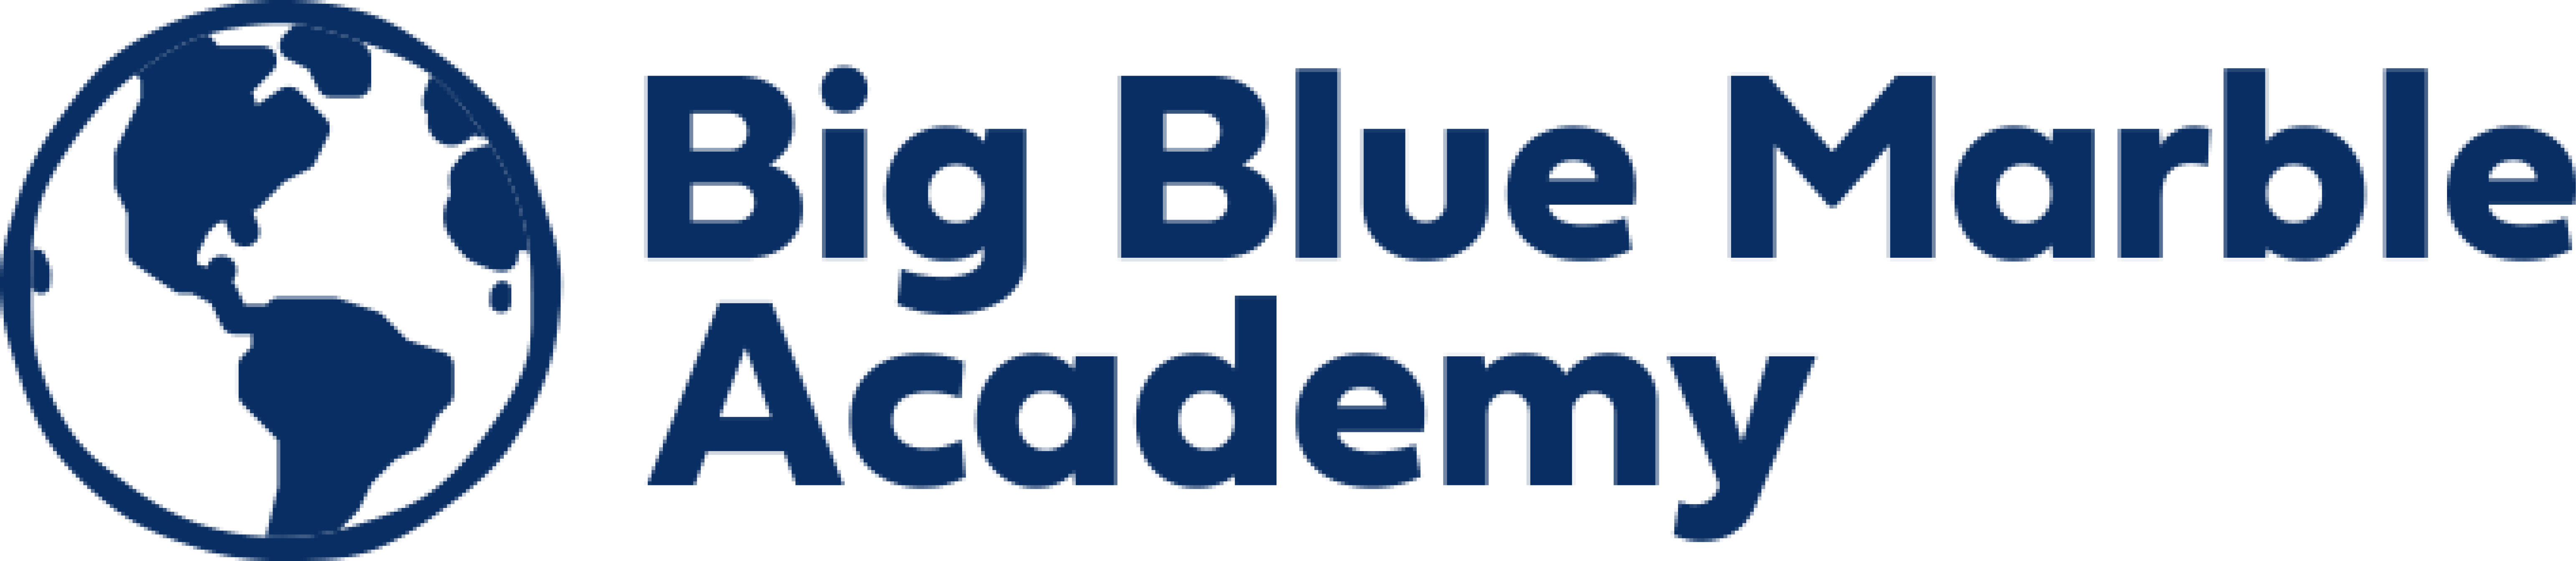 Big blue marble academy